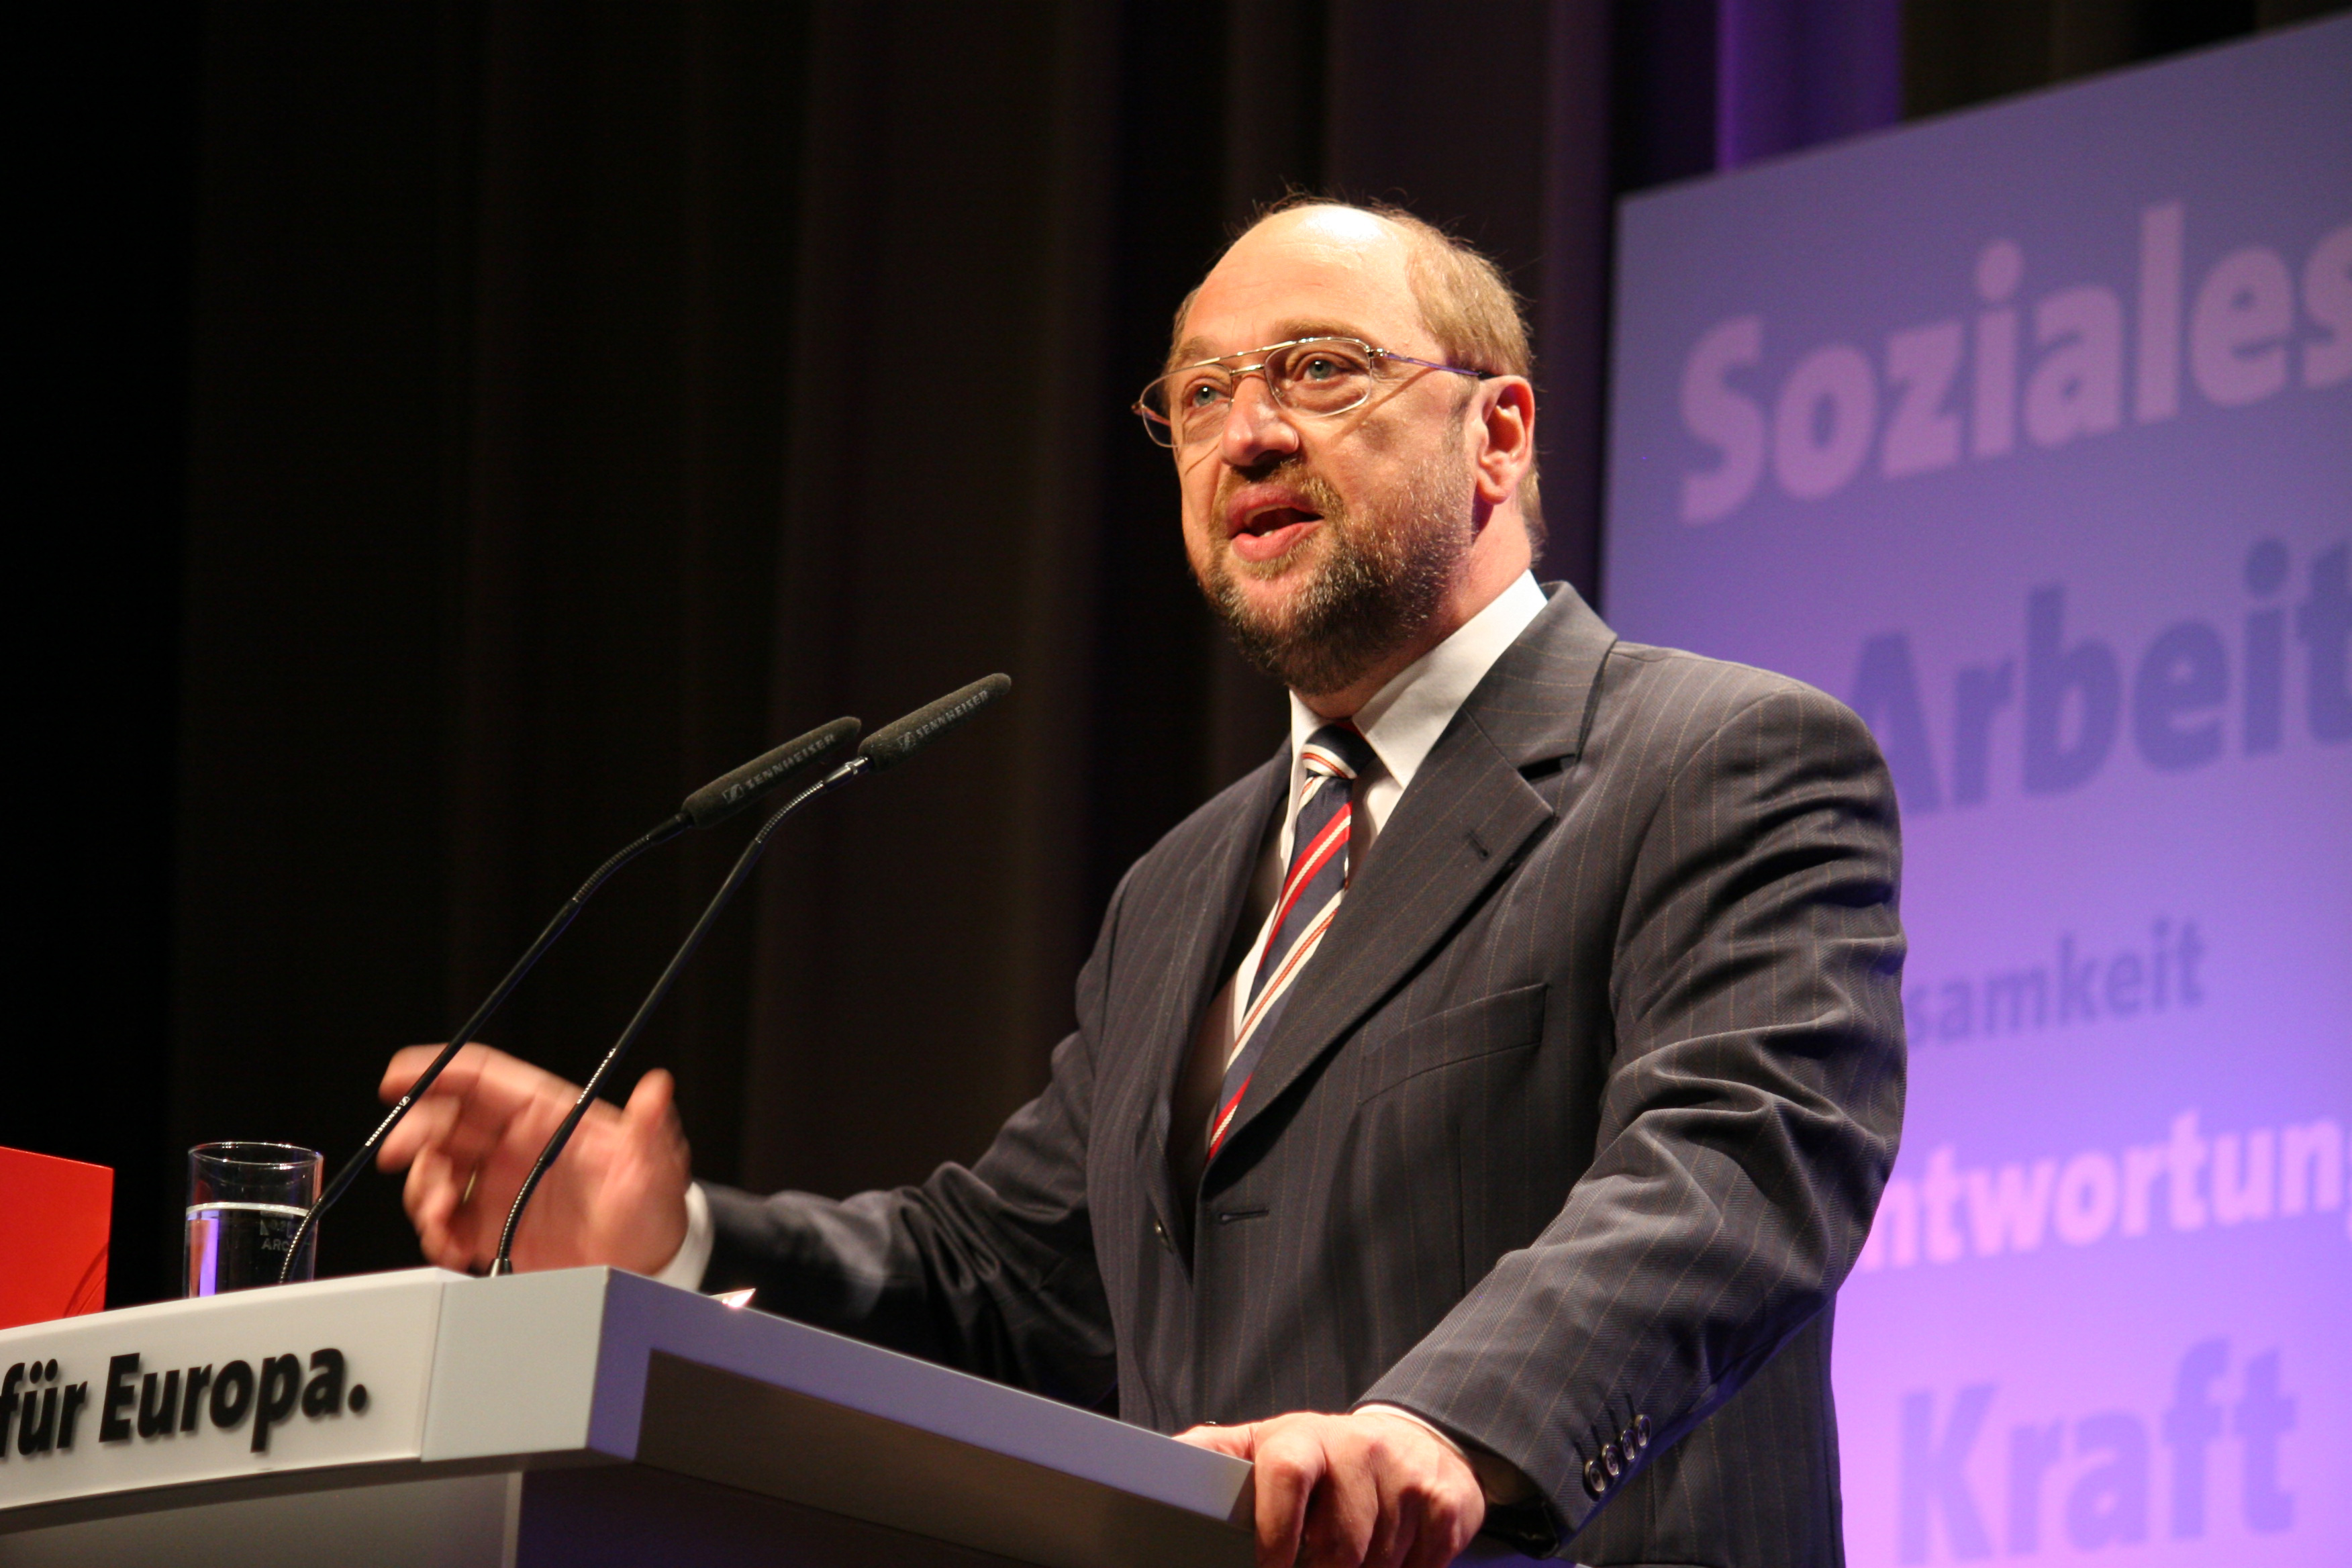 Germania: Schulz lascia l’Europa per la politica. Sarà lui l’anti-Merkel?